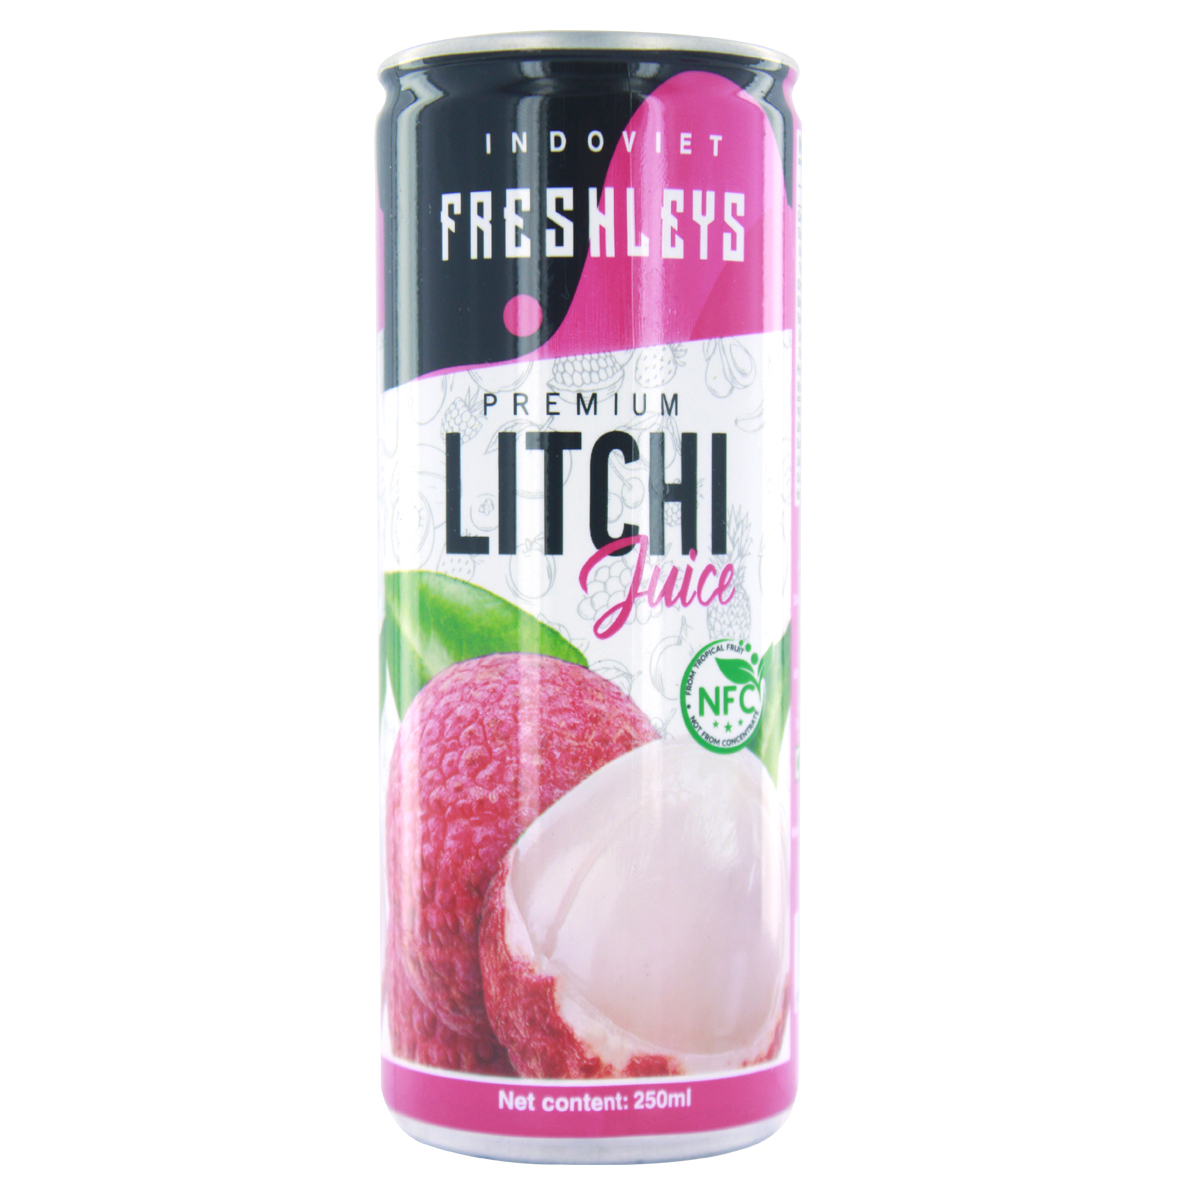 Freshleys Litchi Fruit Juice 250ml